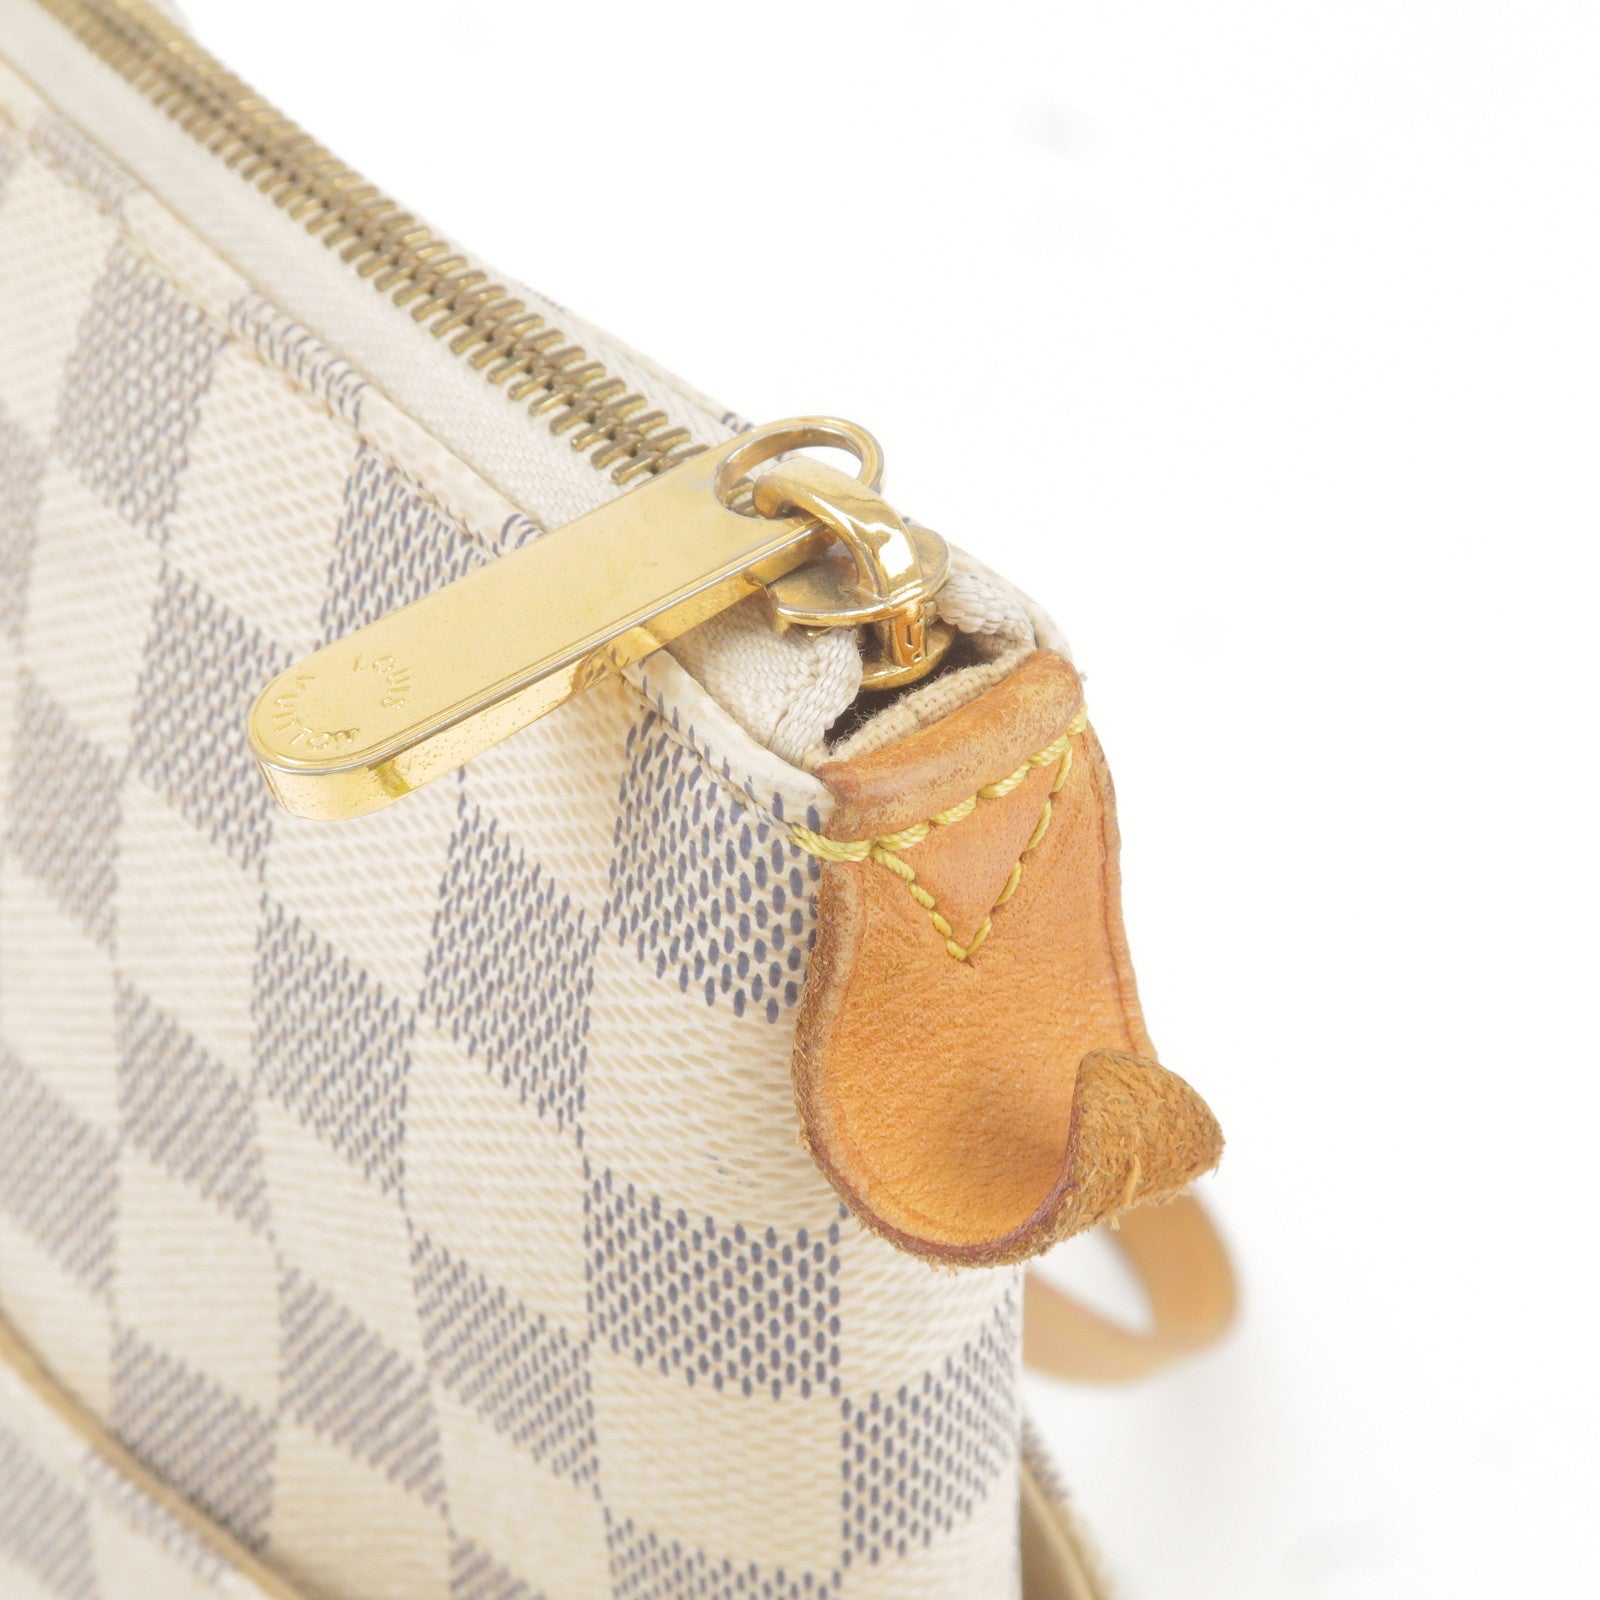 Louis-Vuitton-Damier-Azur-Totally-MM-Tote-Bag-Shoulder-Bag-N51262